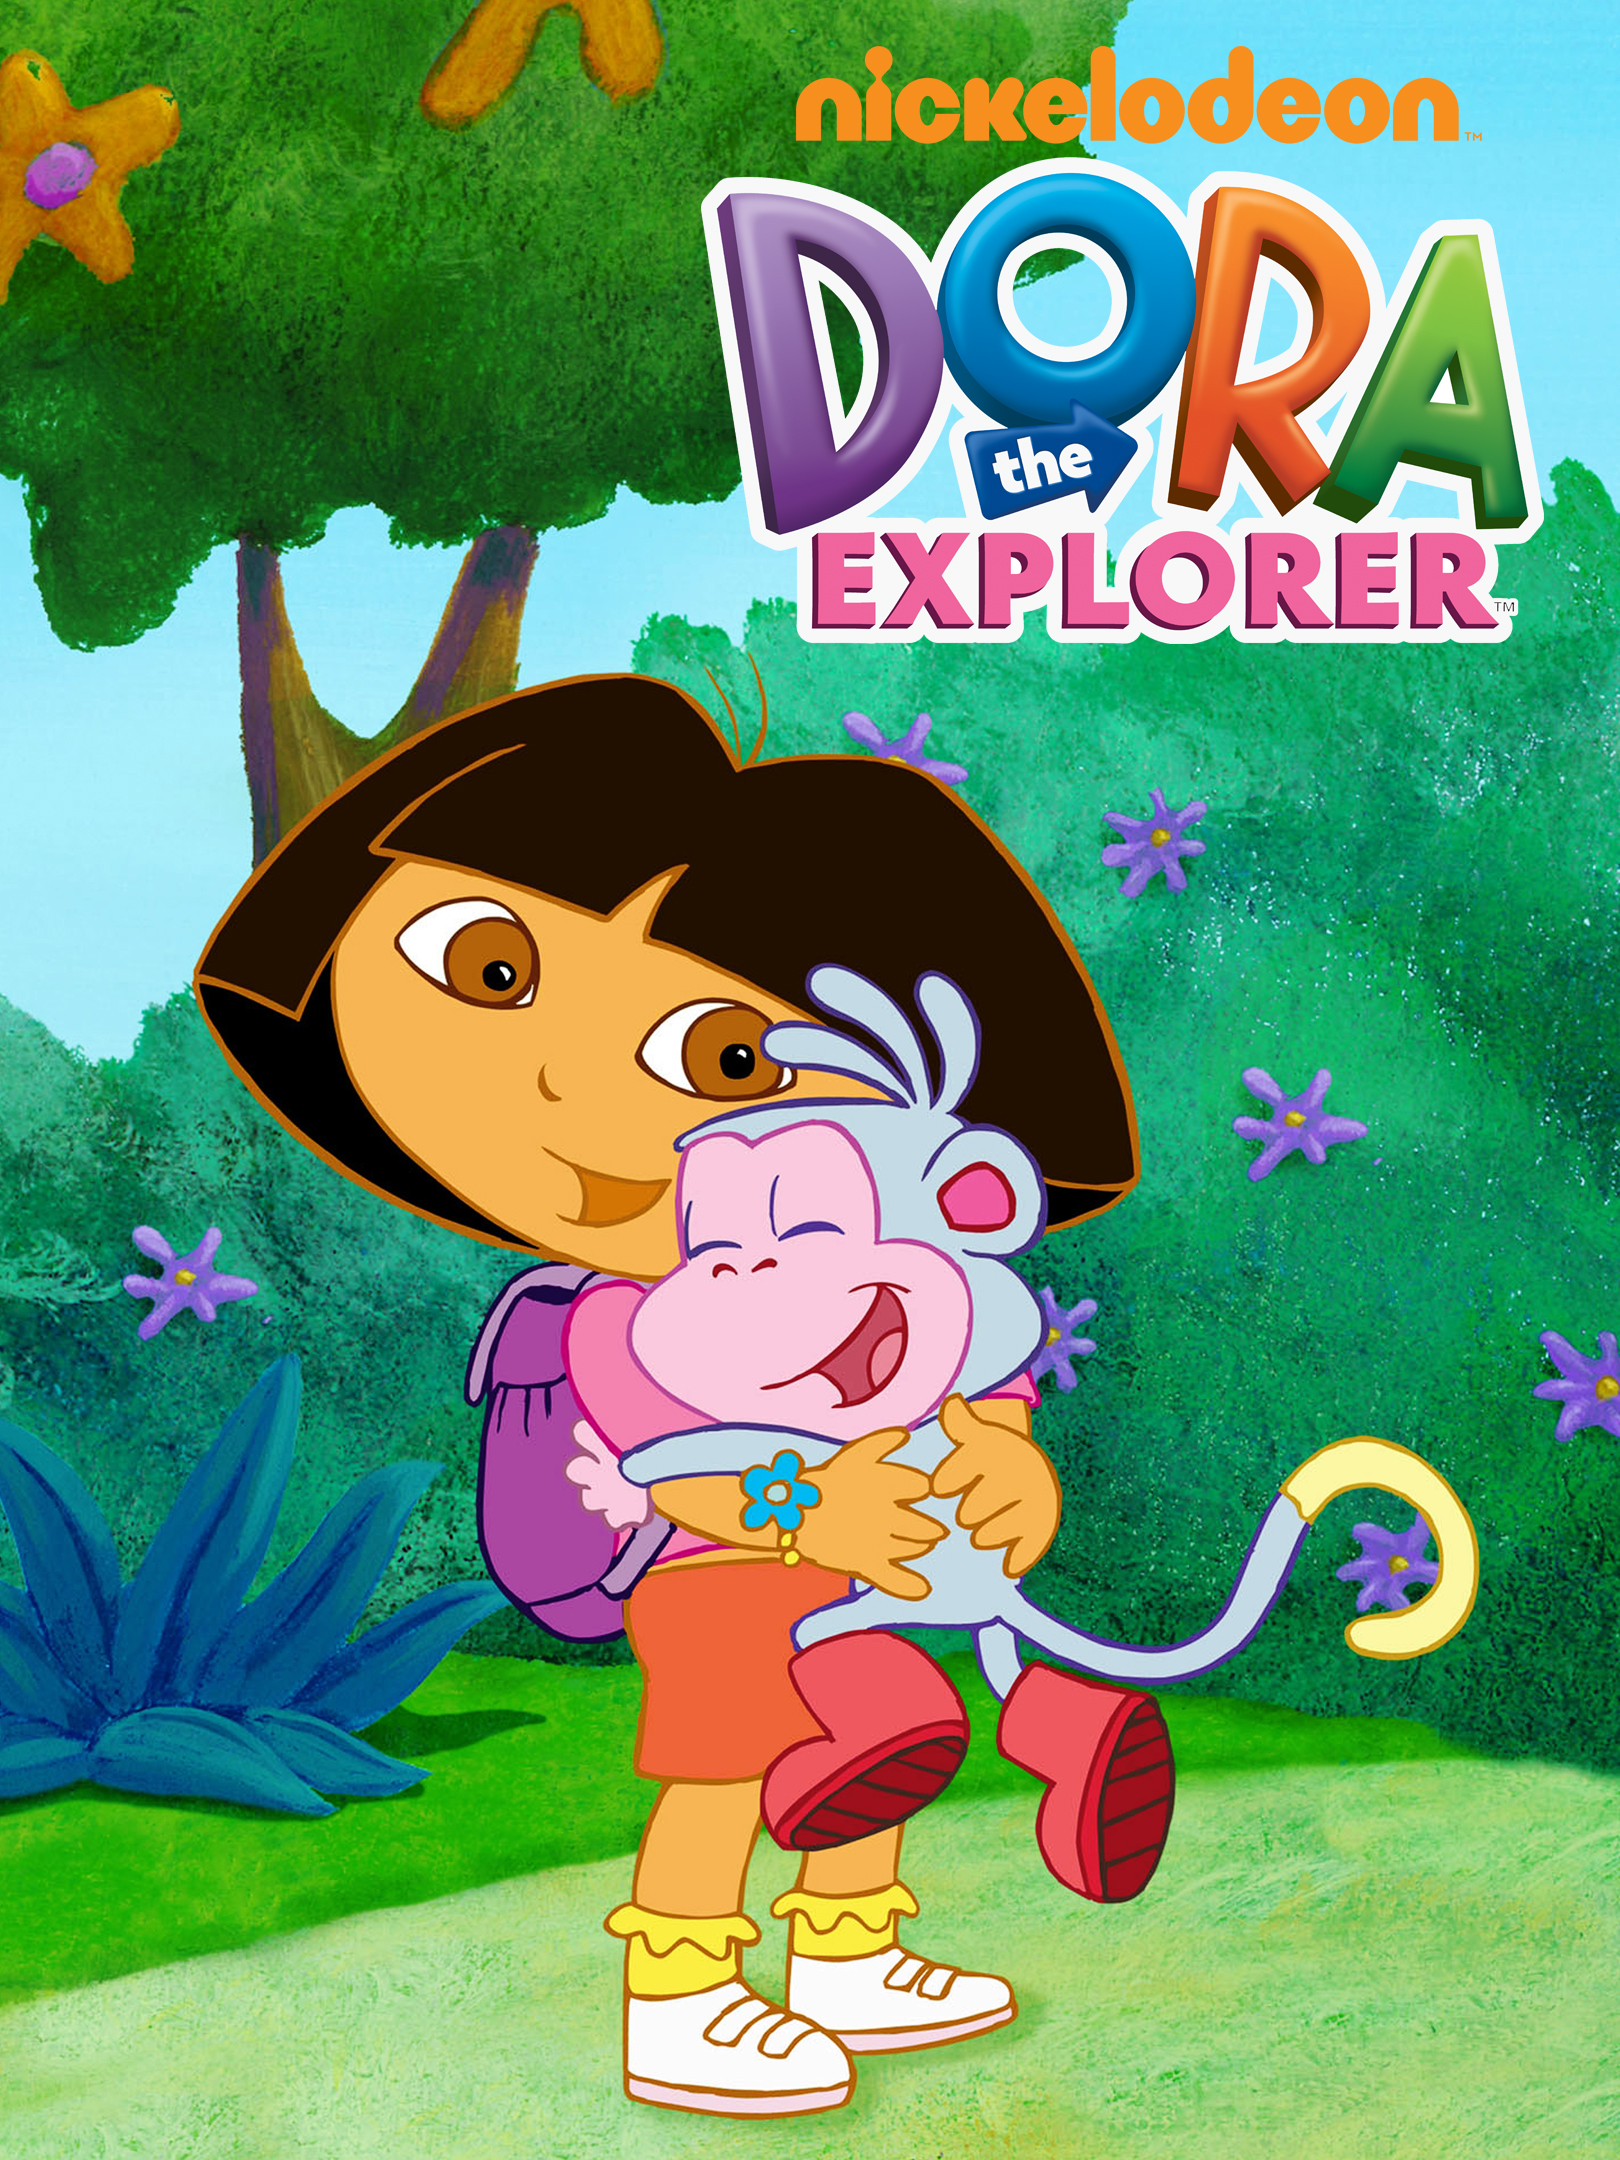 pictures of dora the explorer